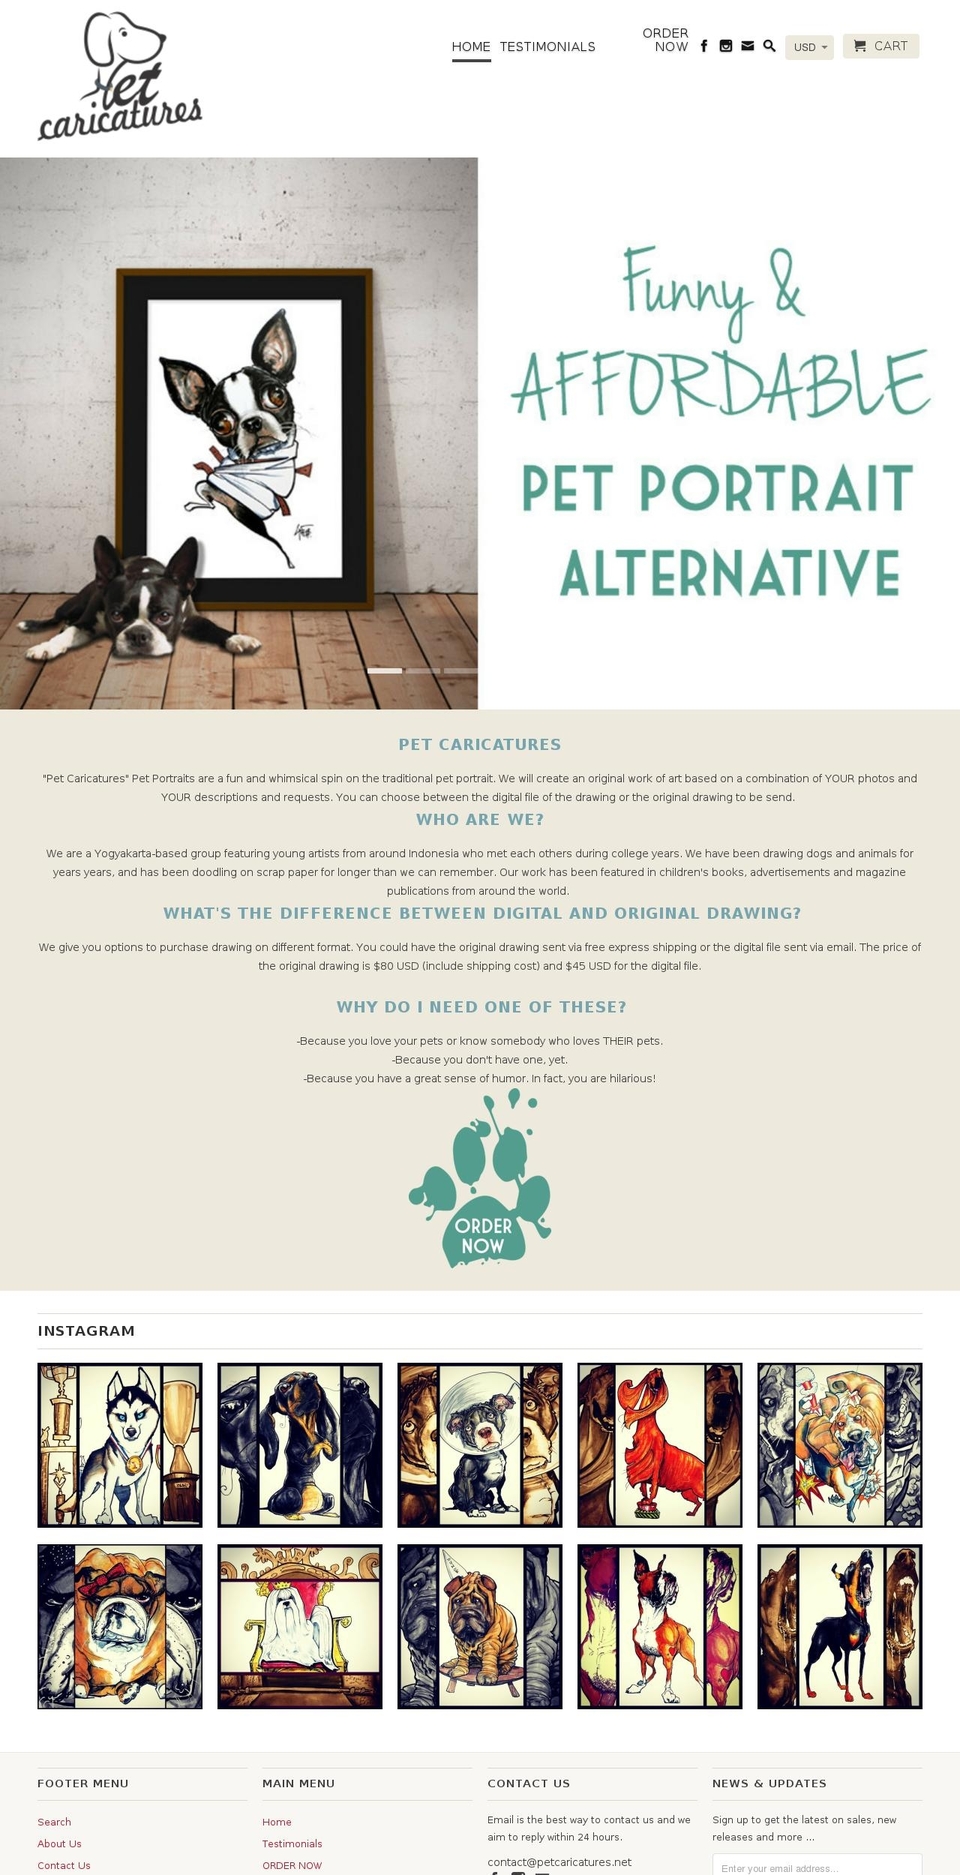 petcaricatures.net shopify website screenshot